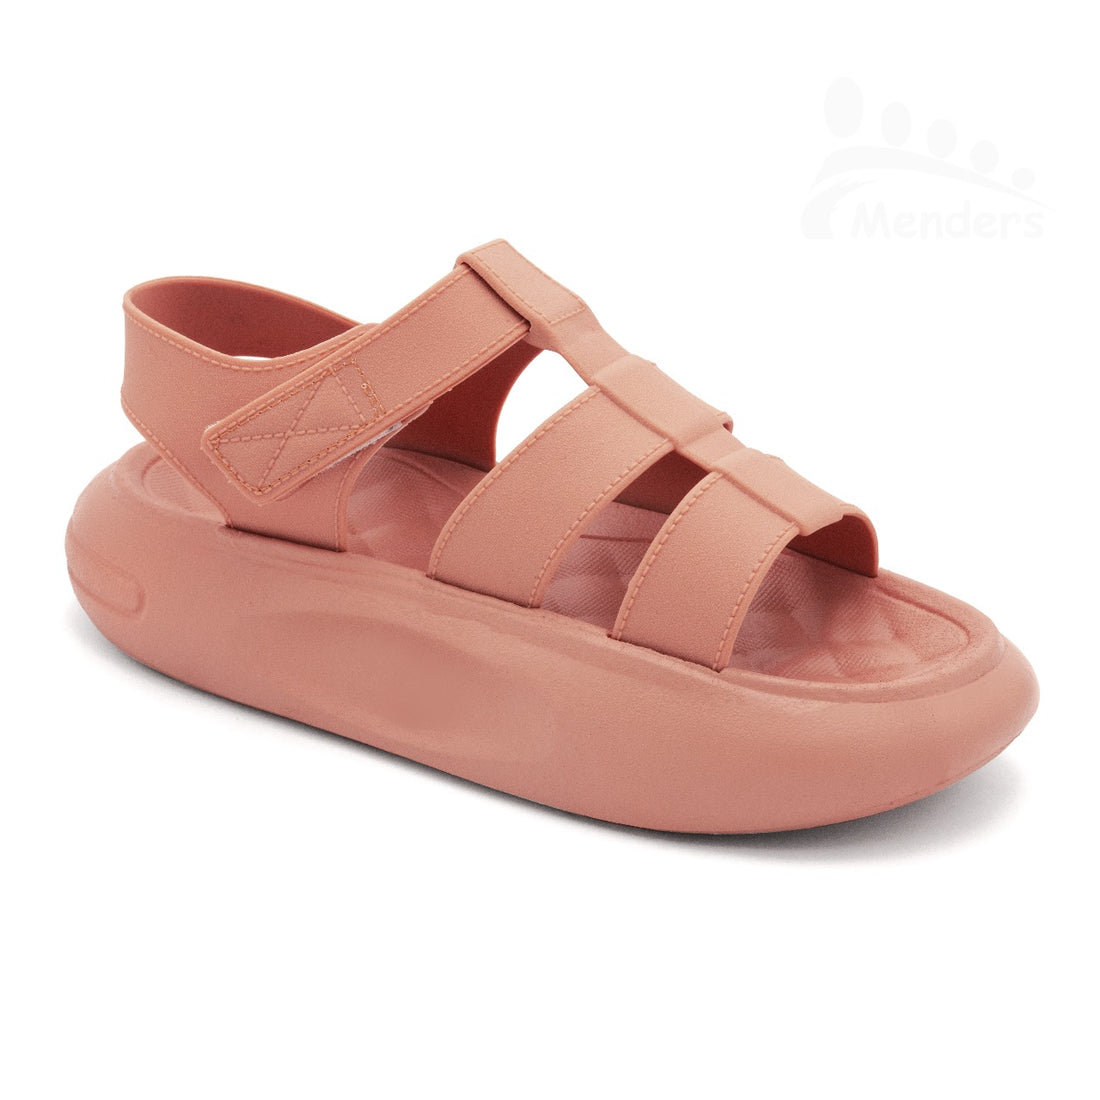 Gamblia sole sandal